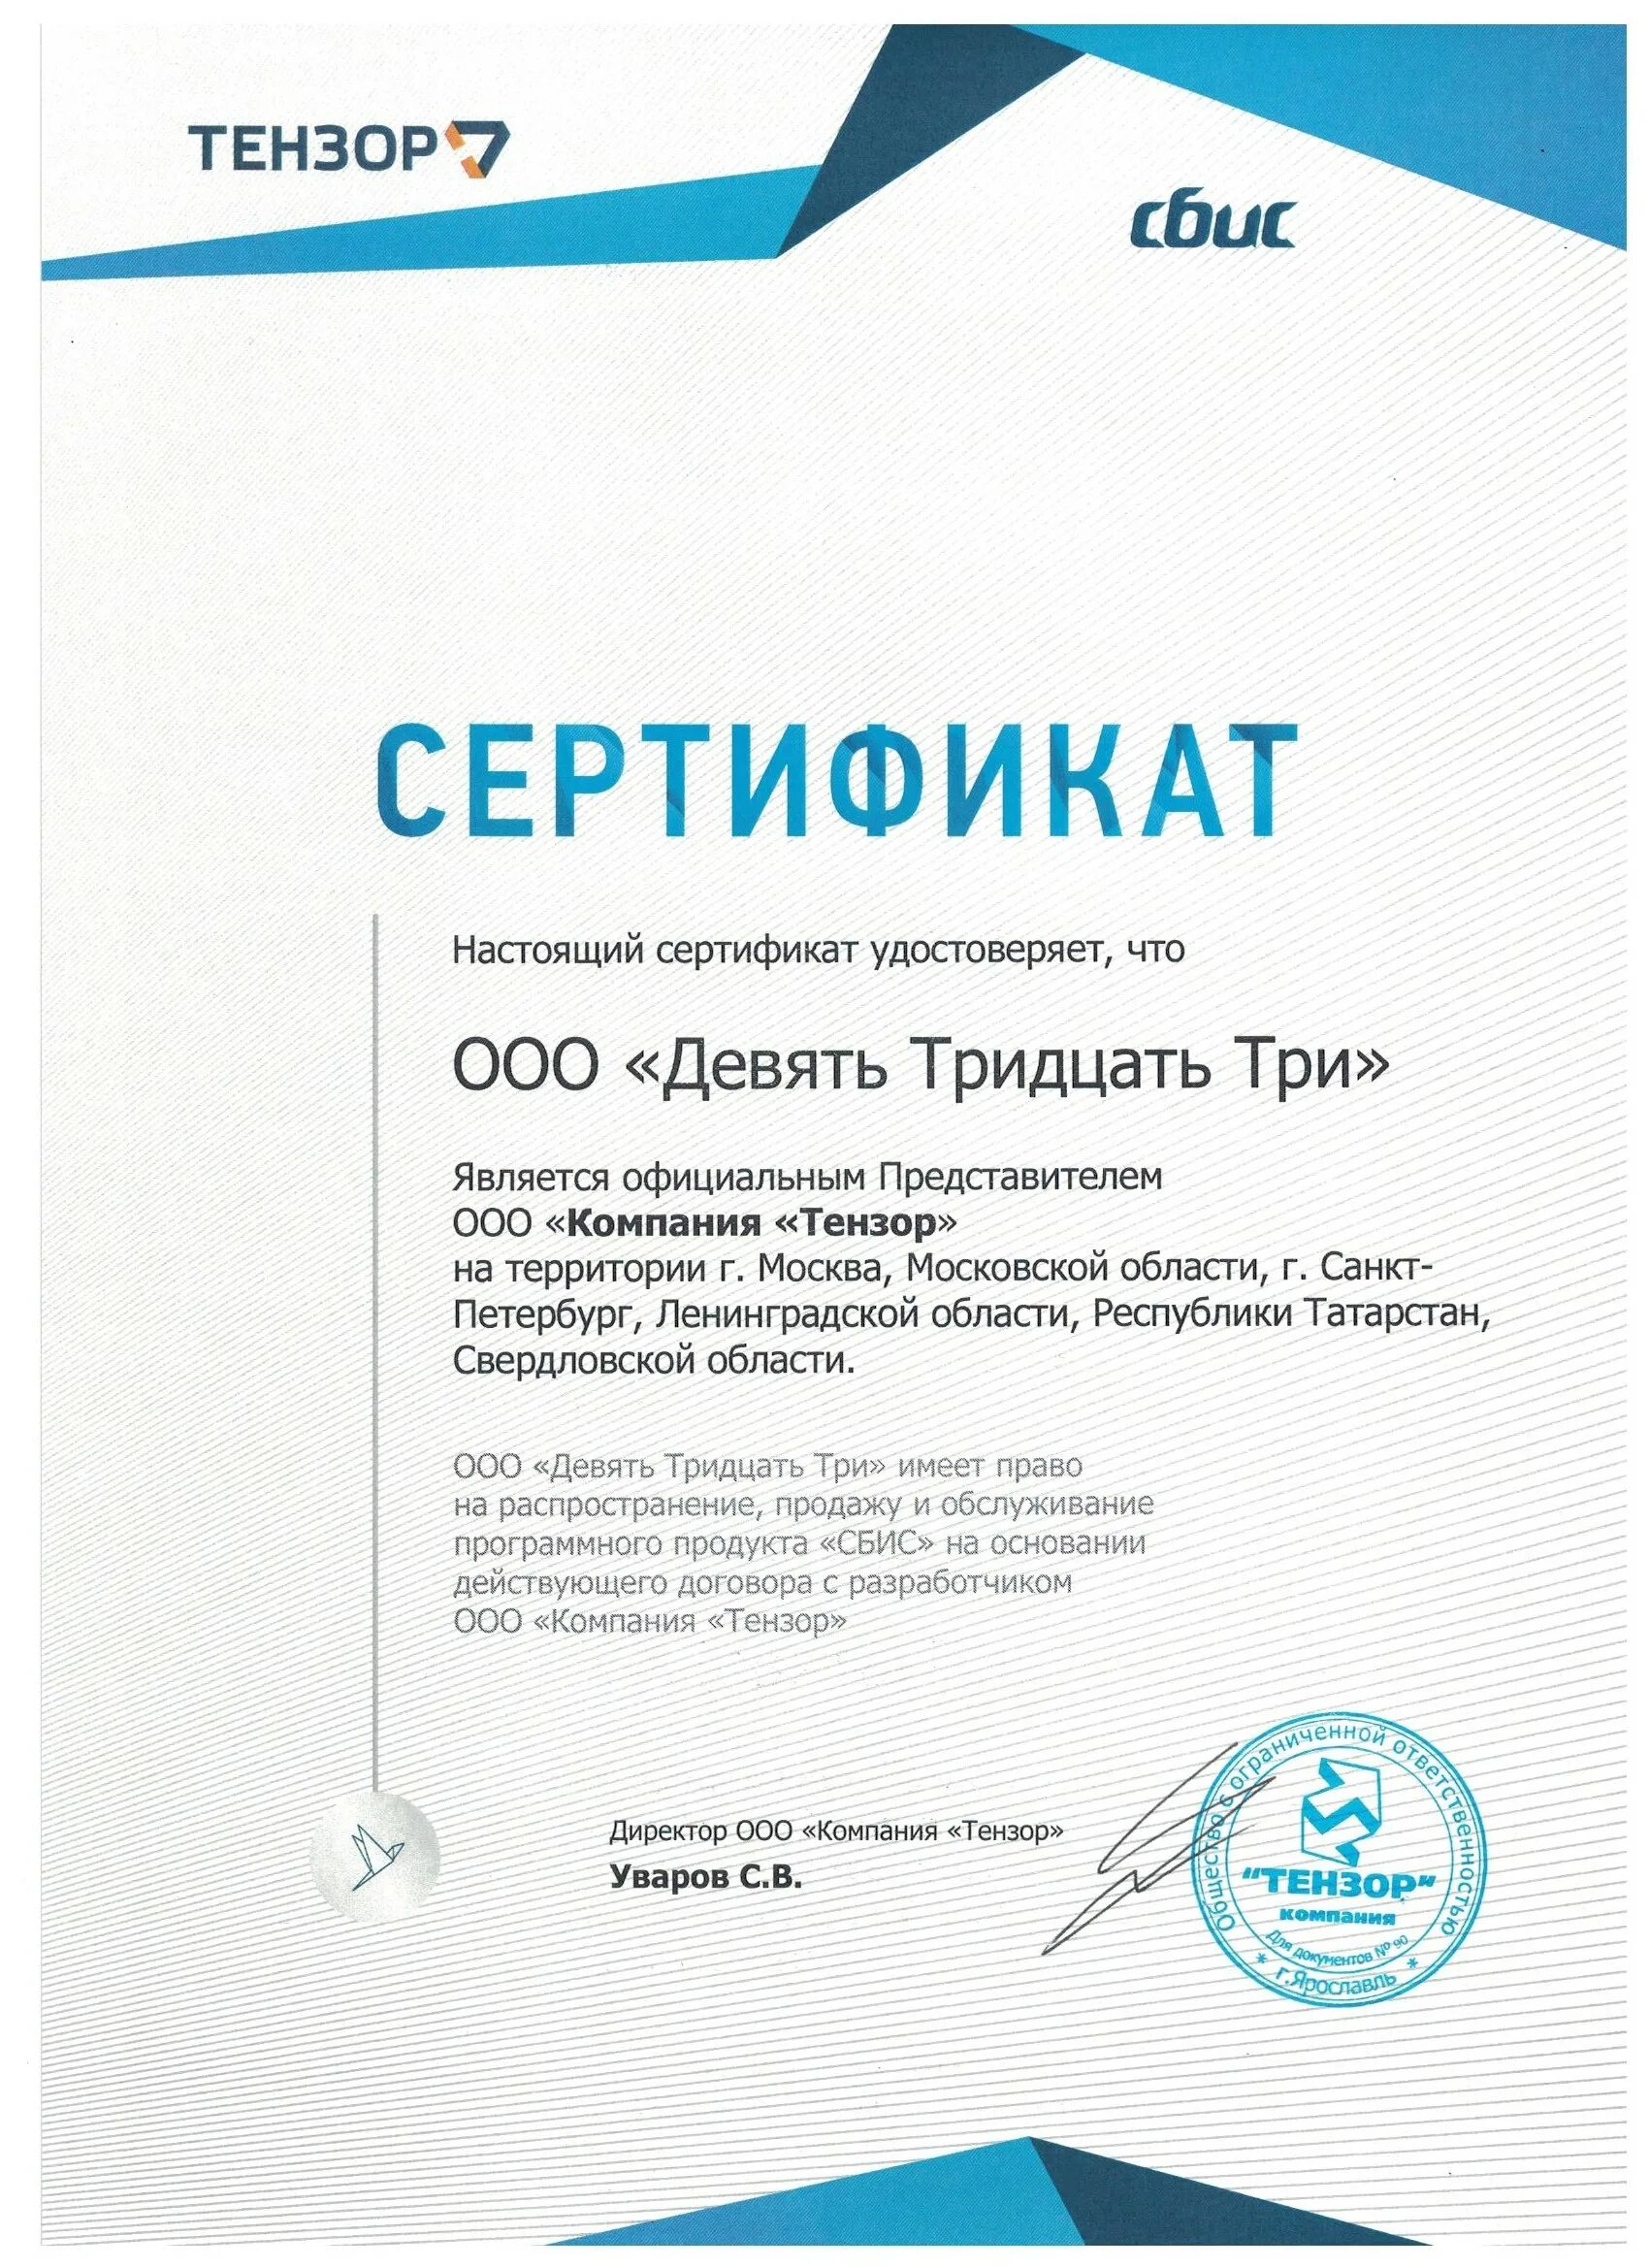 Сертификат Тензор. Сертификат компании Тензор. Сертификат СБИС. ООО Тензор.